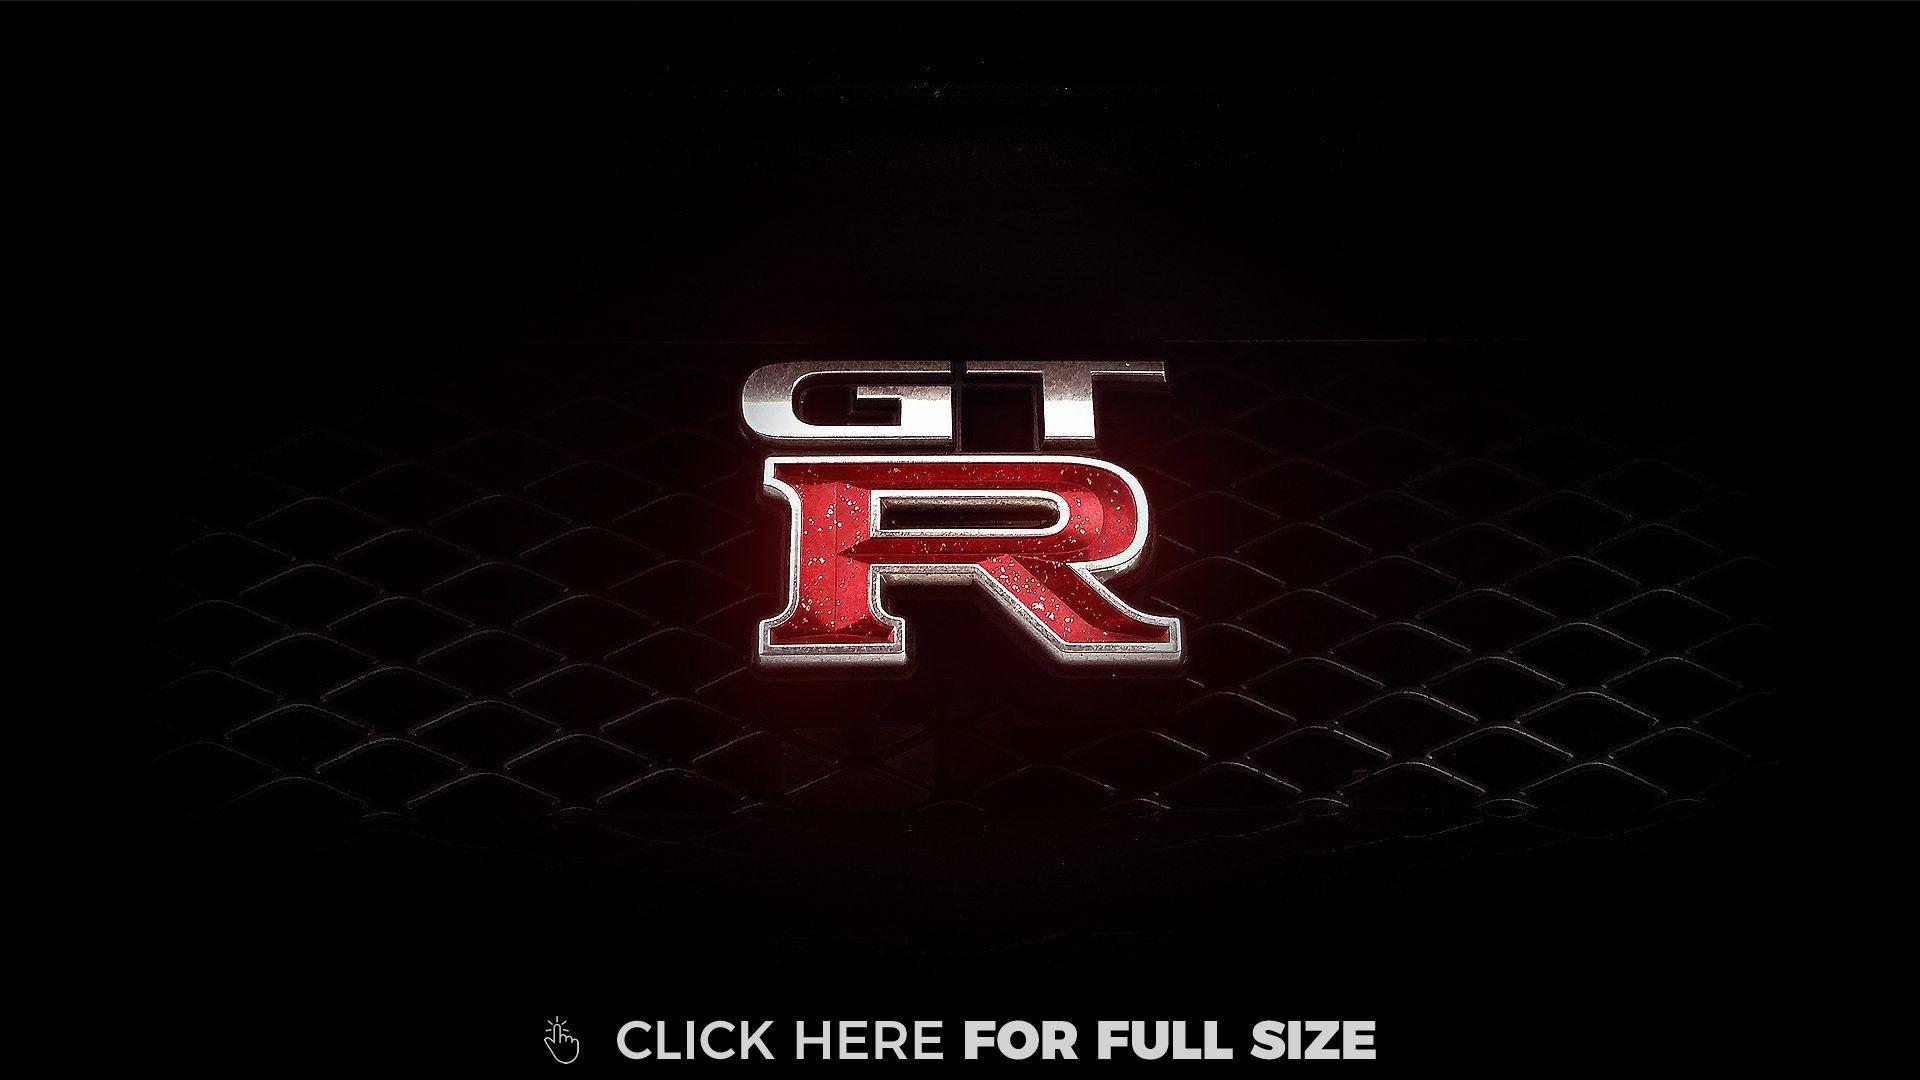 GTR Logo - Gtr Logo Wallpaper(54+) Wallpaper Collections